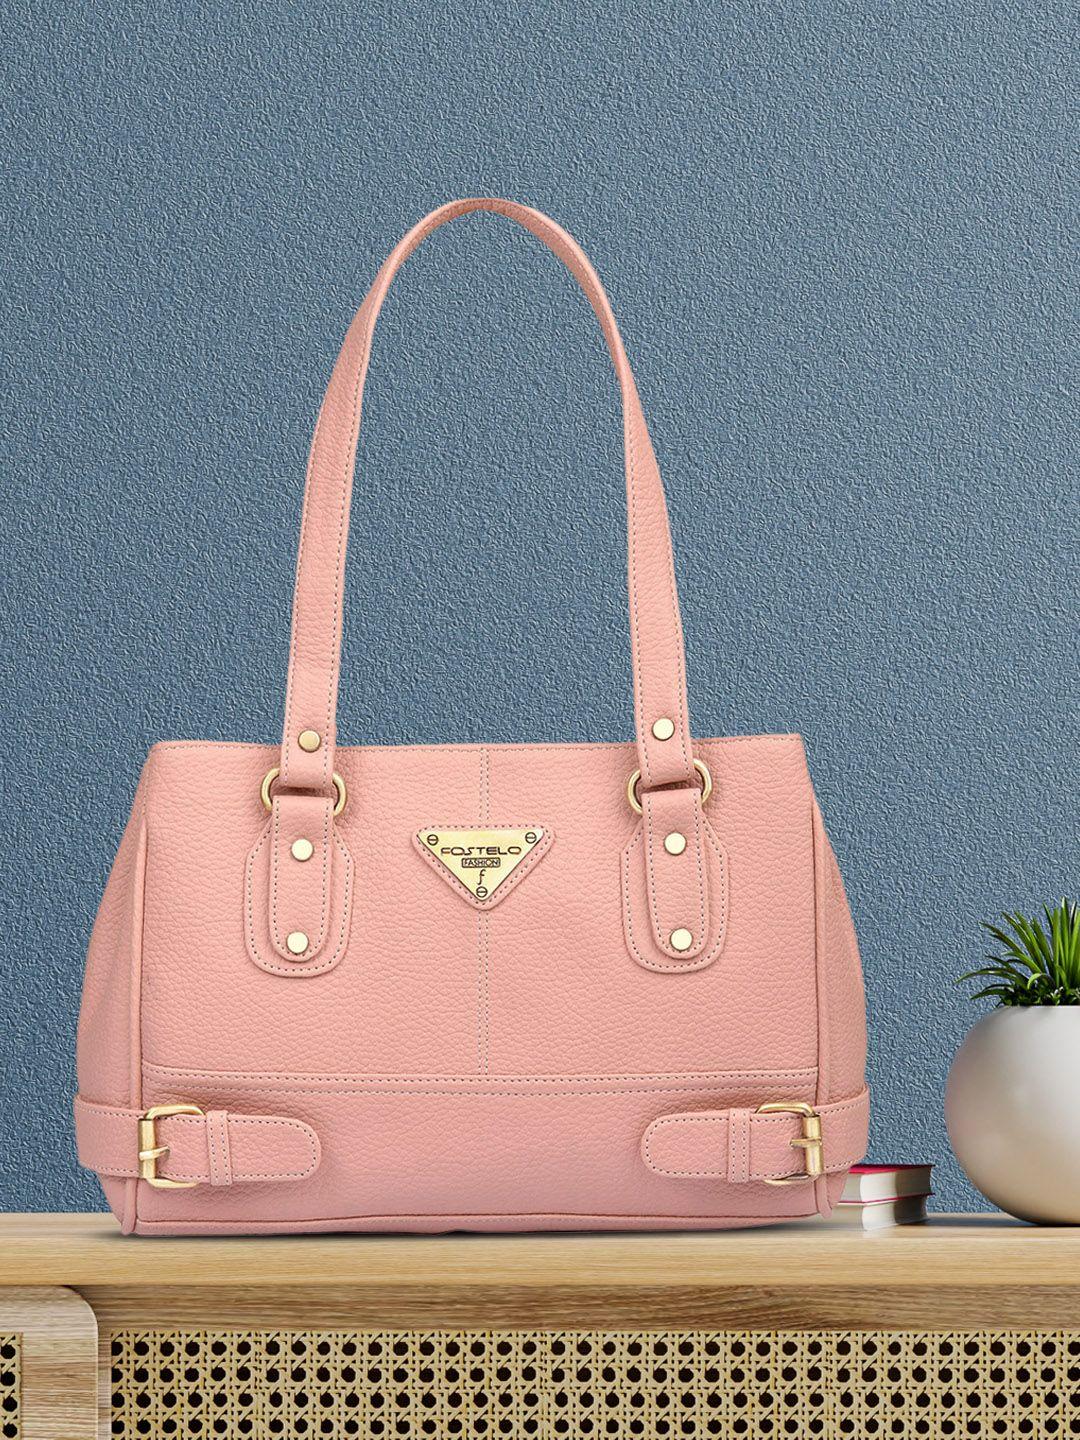 fostelo-pink-textured-shoulder-bag